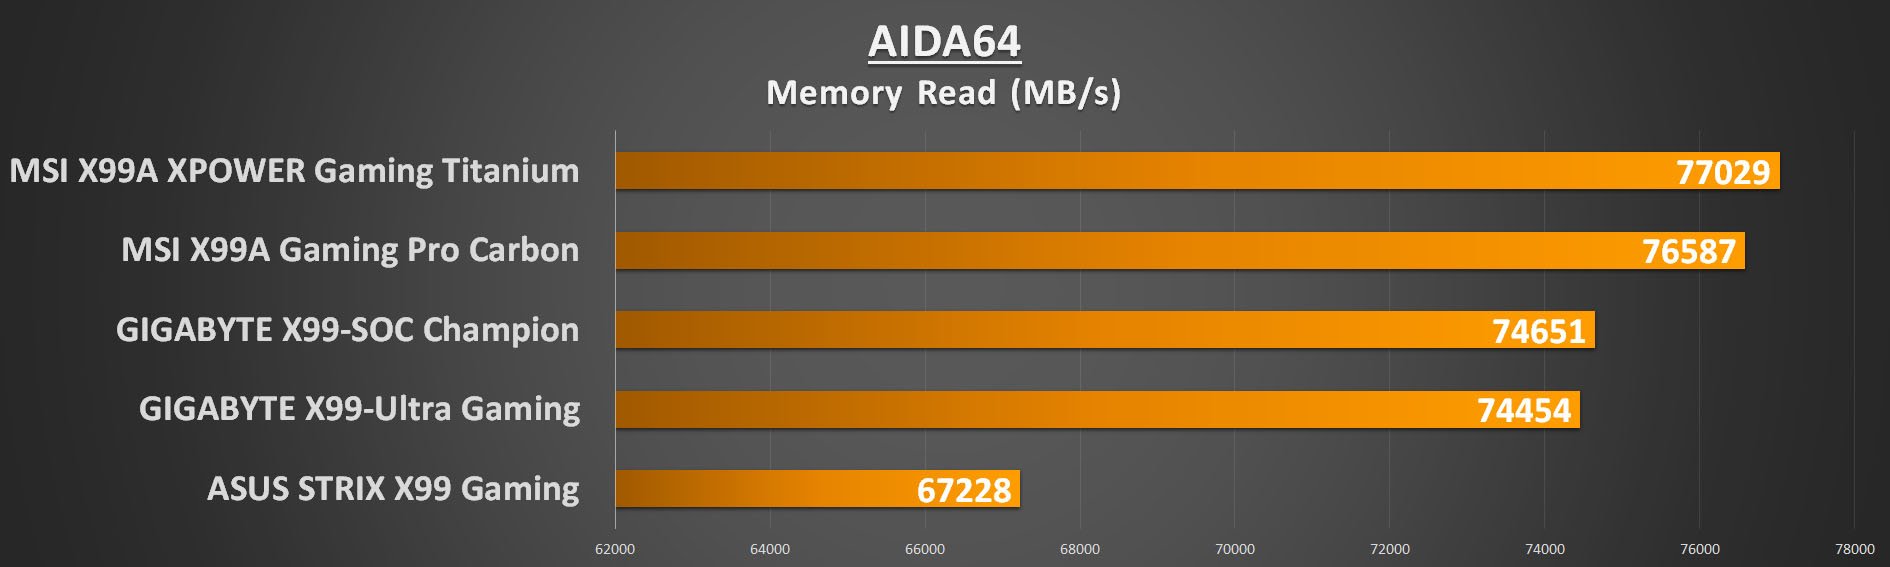 gigabyte-x99-ultra-gaming-aida-mem-read